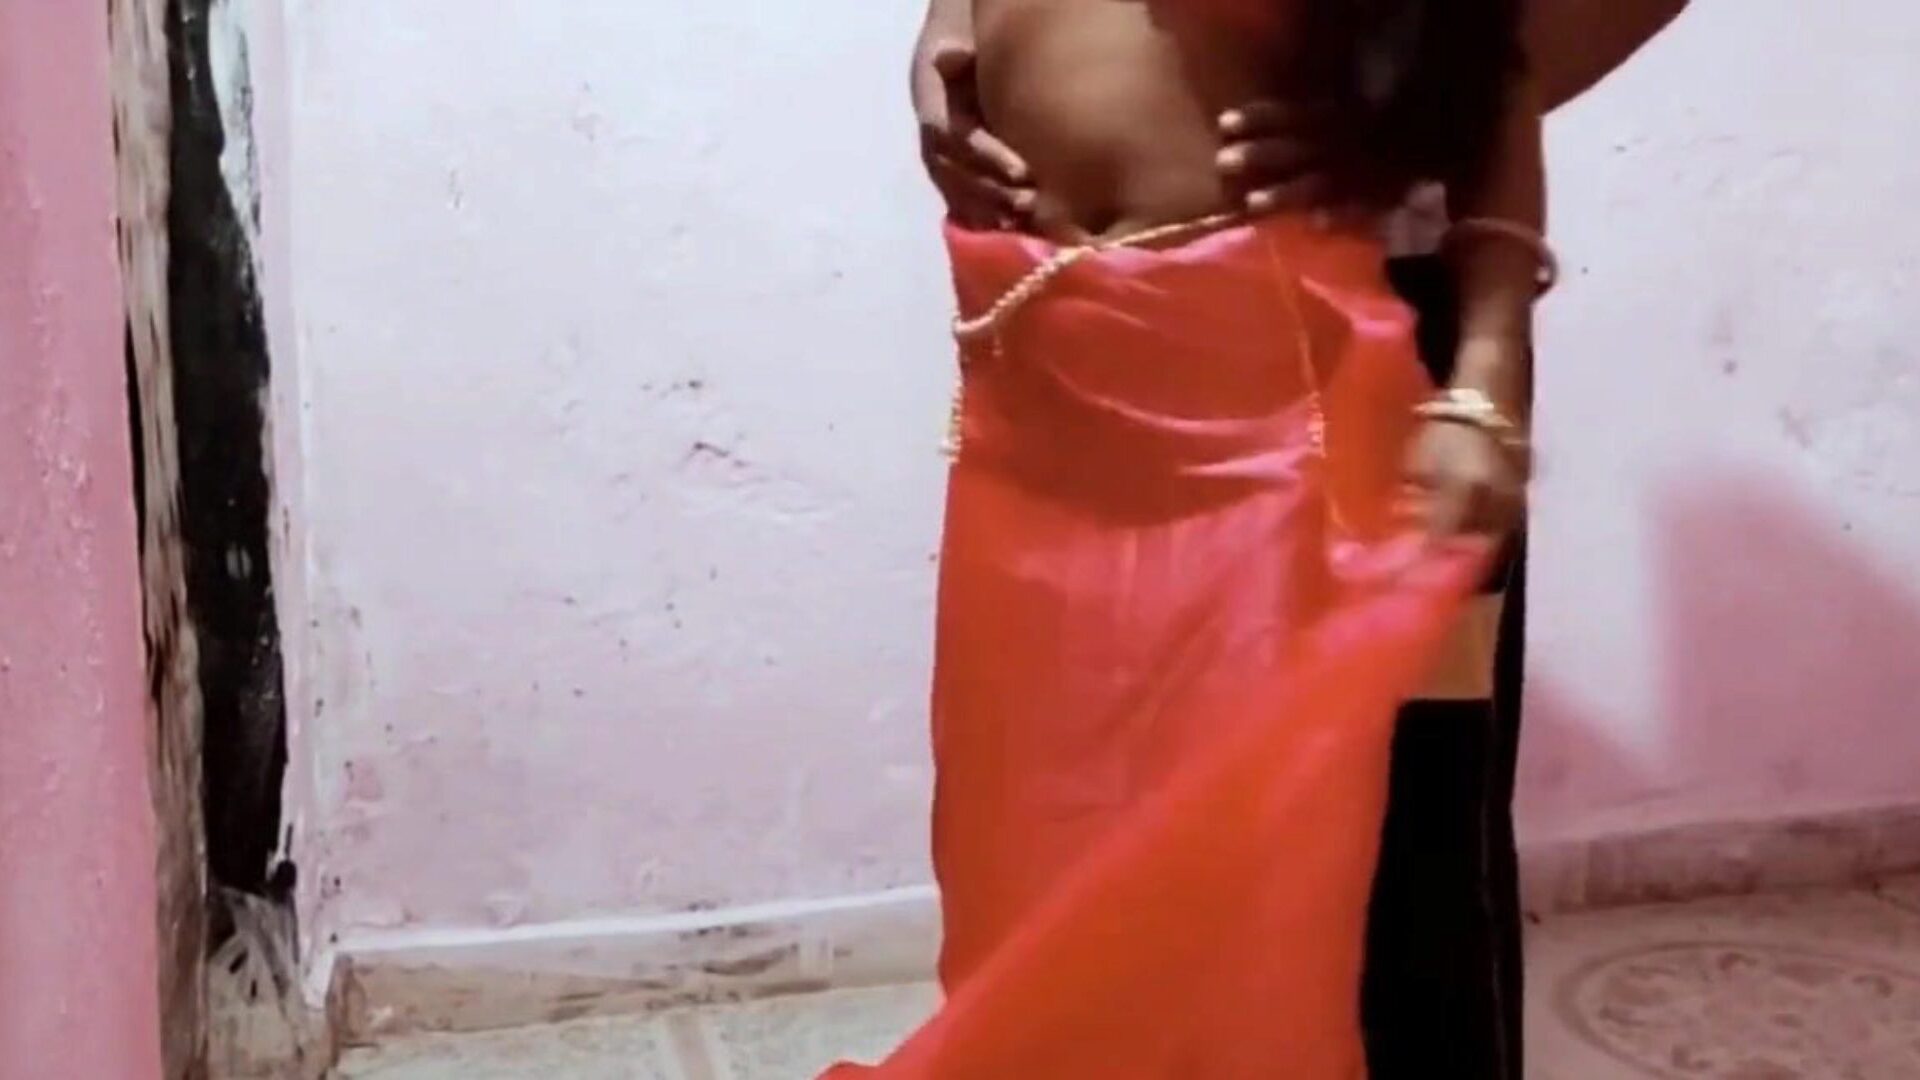 alex ne bhabhi ko choda værelse sjov med hendes husbond: gratis porno b9 se alex ne bhabhi ko choda værelse sjov med hendes husbond film scene på xhamster - det ultimative arkiv med gratis for alle Sri Lanka asiatiske hd xxx pornografi tube film scener